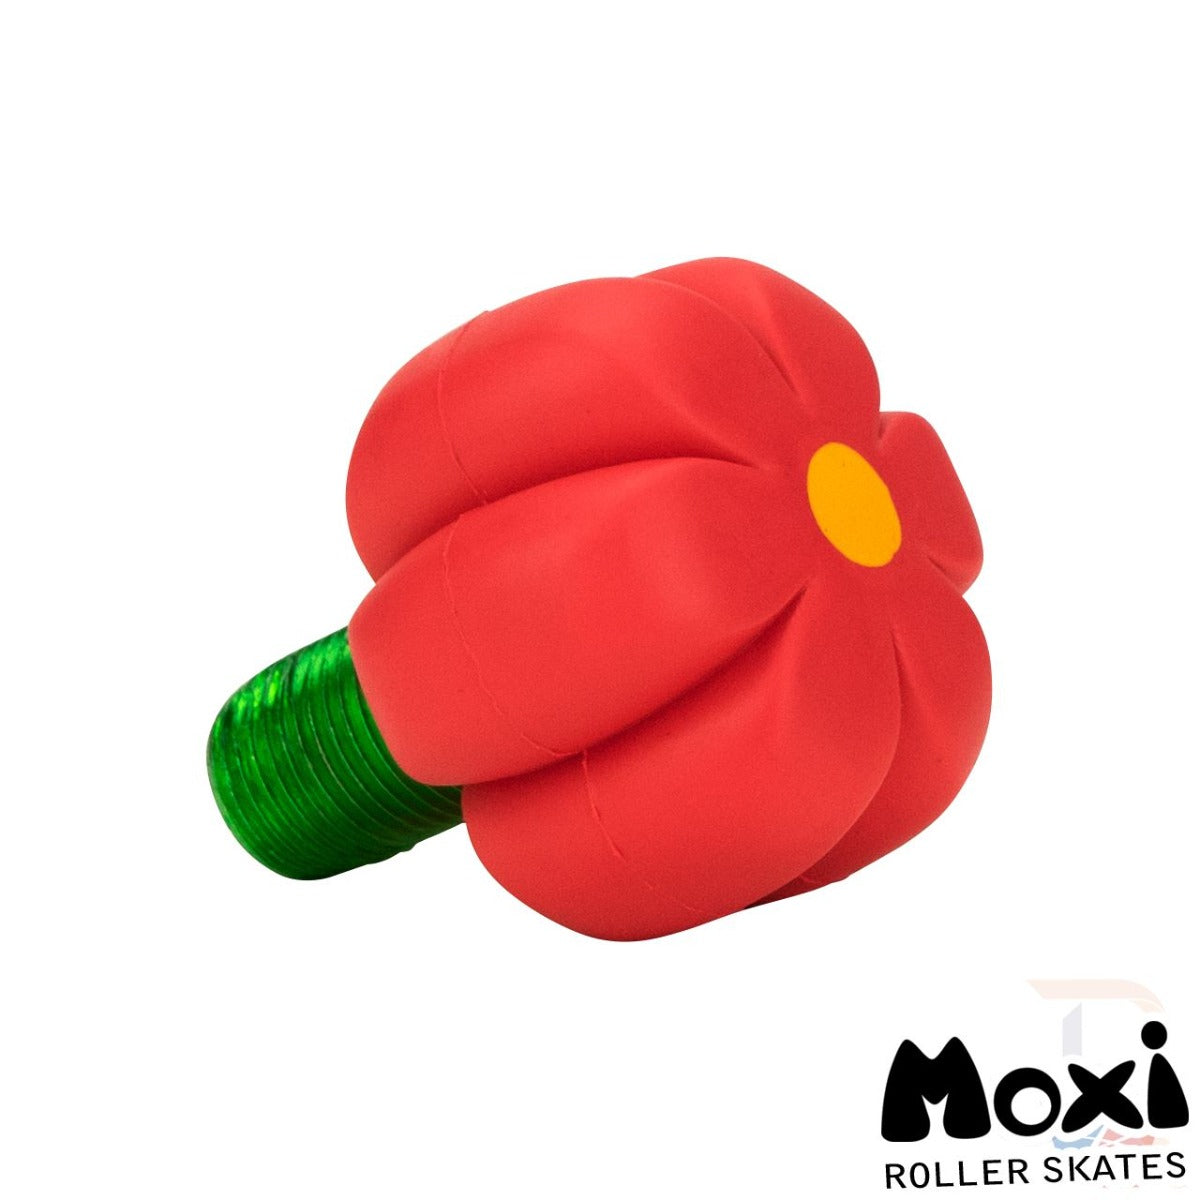 Moxi Brake Petal Roller Skate Toe Stops - Red Hibiscus - Side